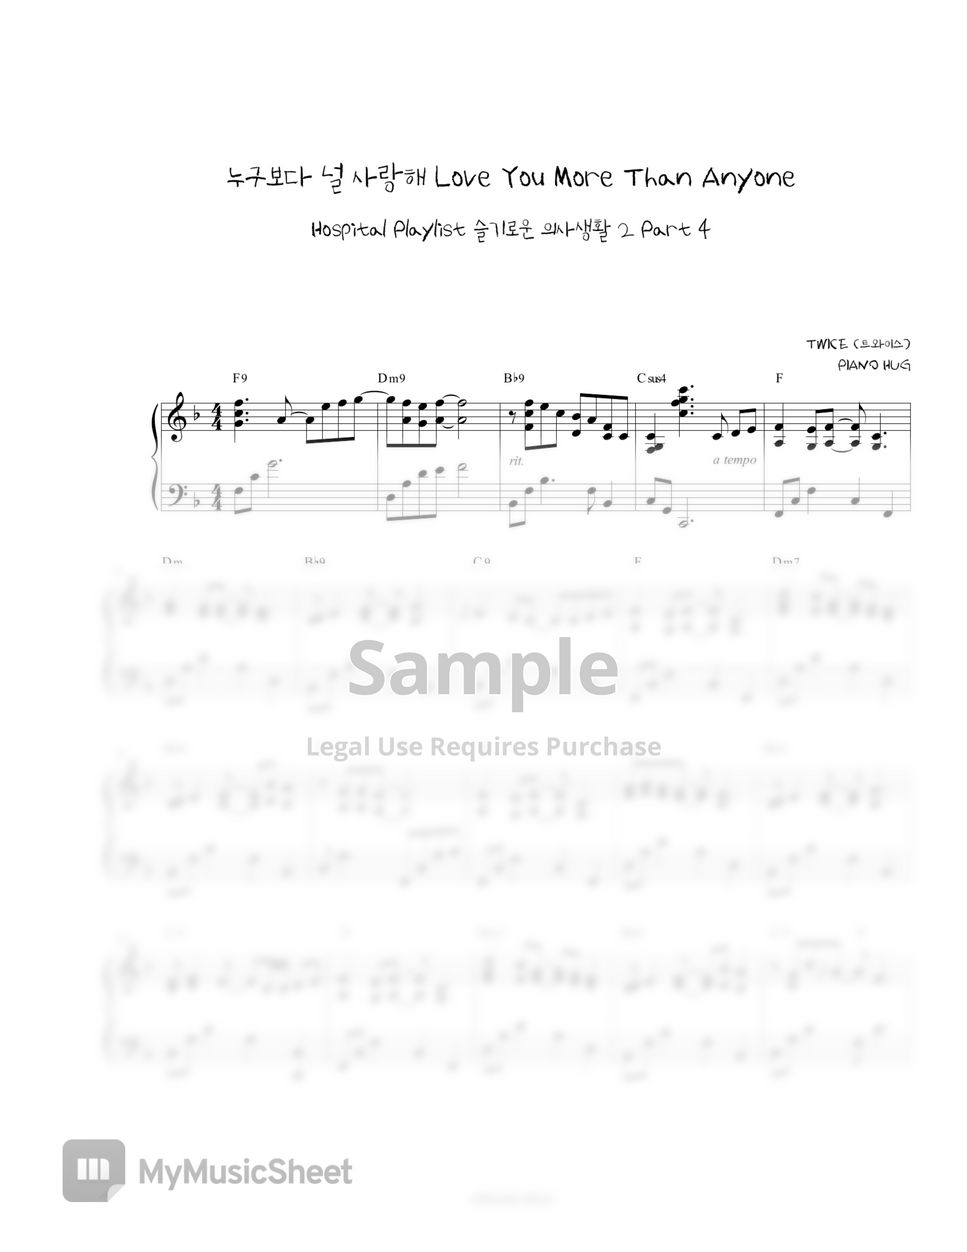 TWICE - Love You More Than Anyone (Hospital Playlist Season2 OST) by Piano Hug